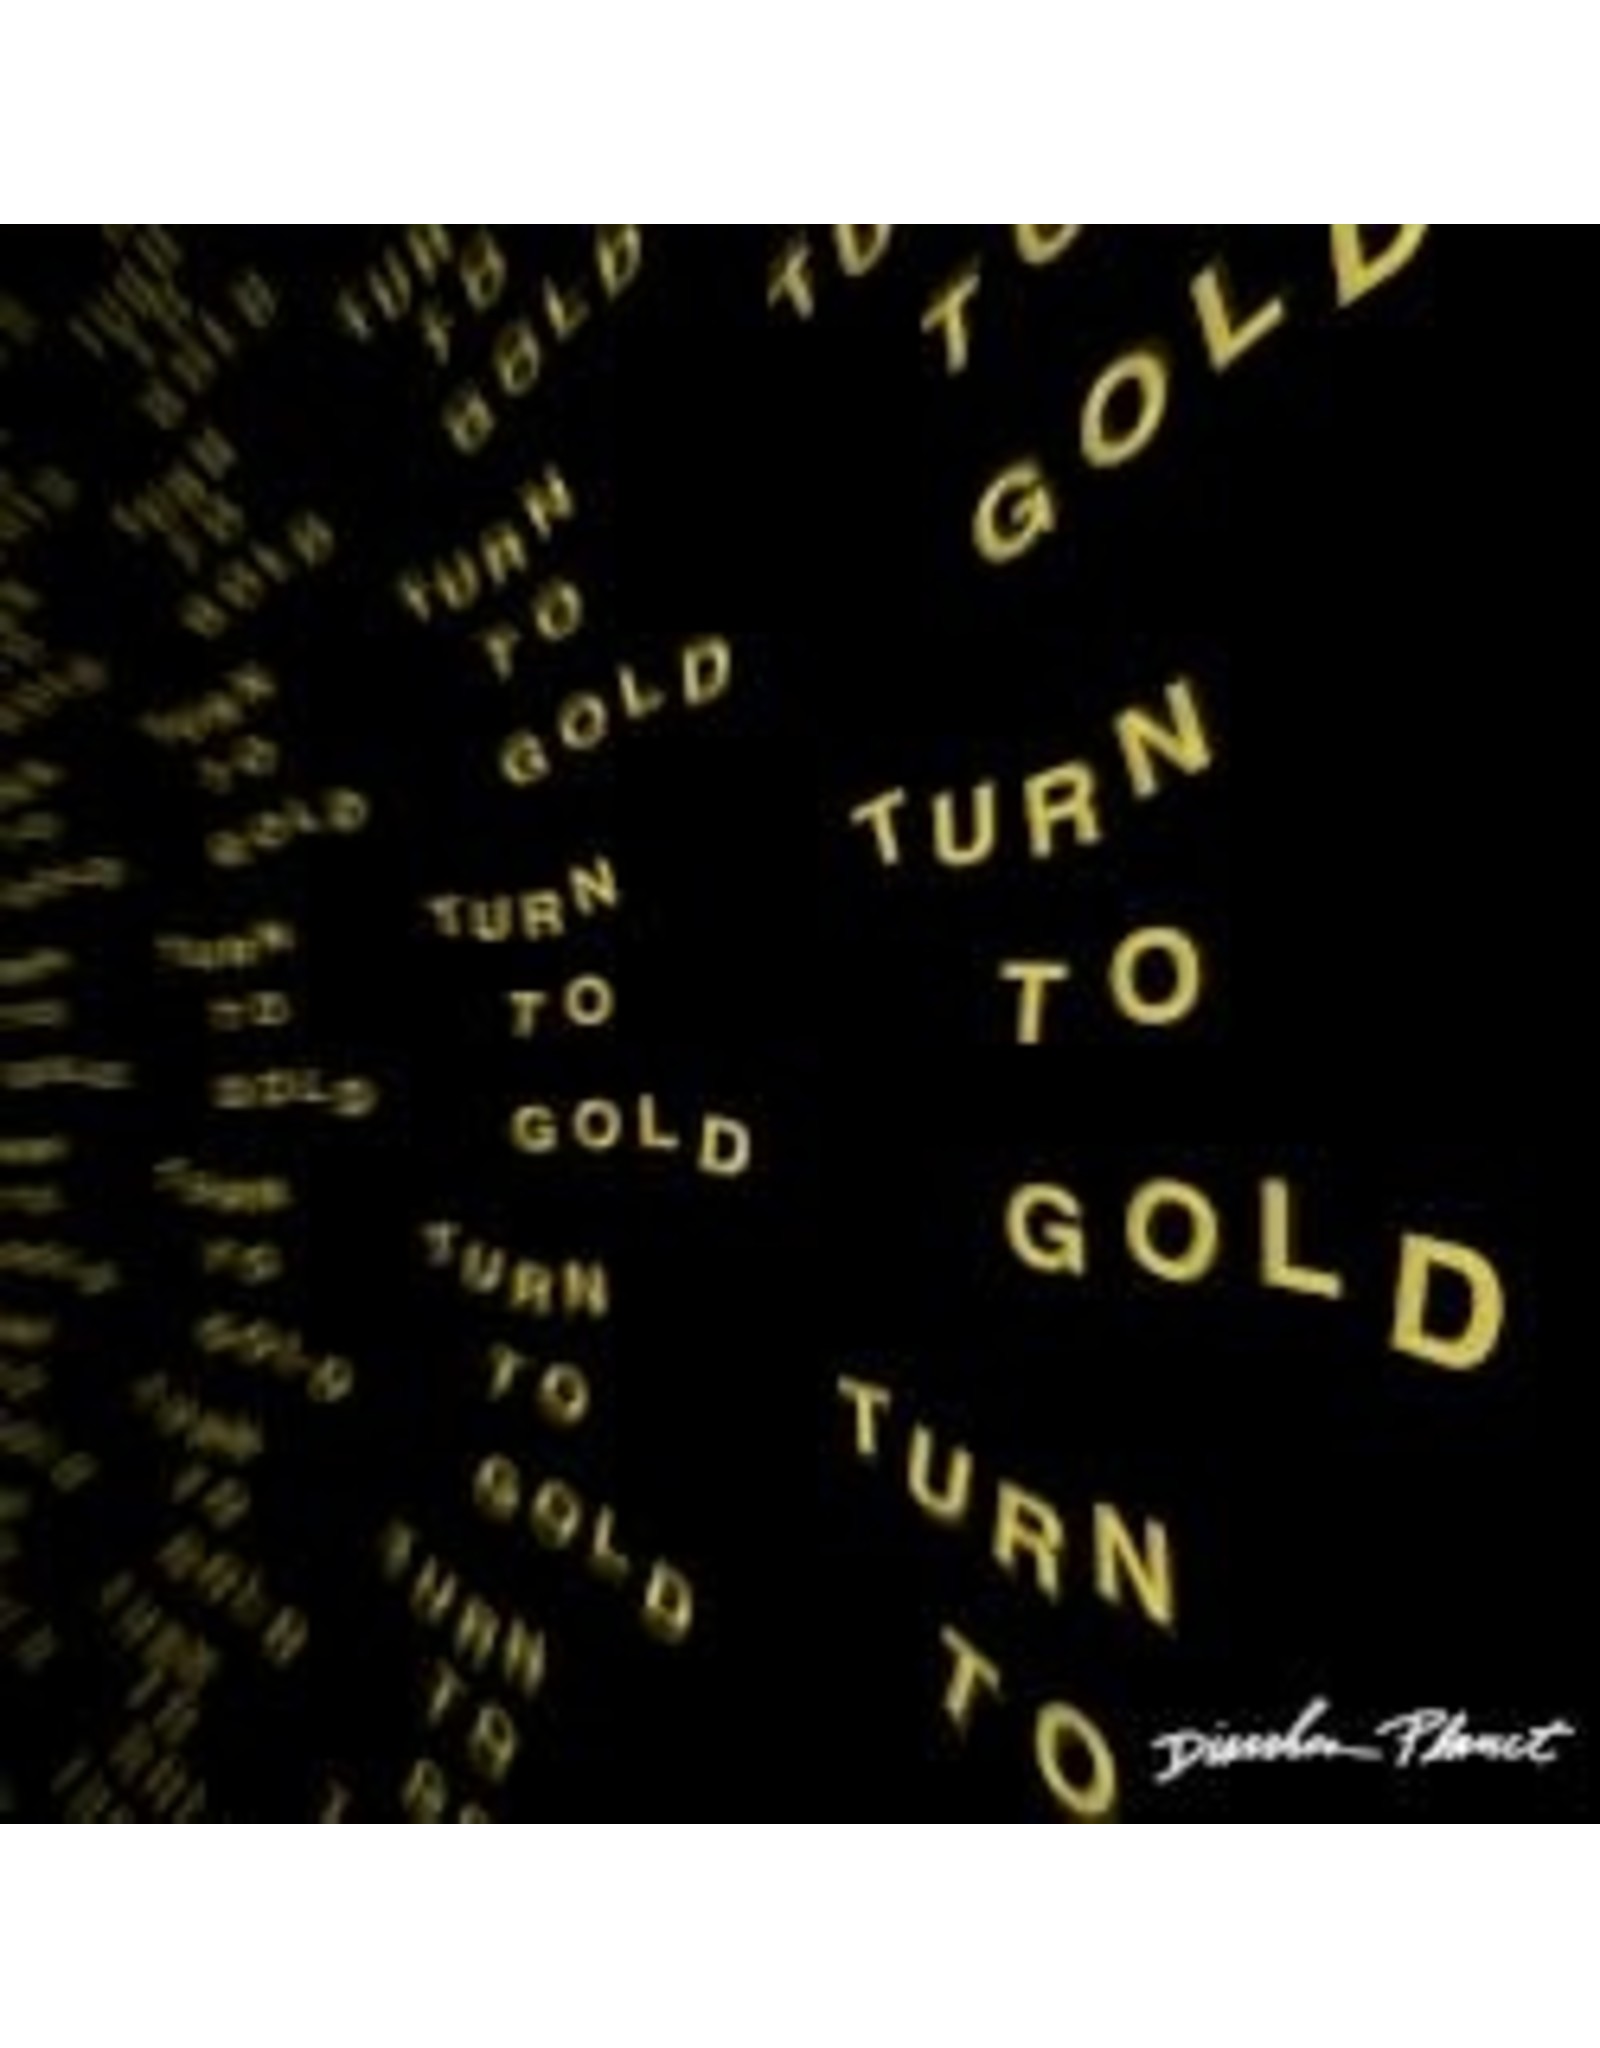 Diarrhea Planet - Turn to Gold LP